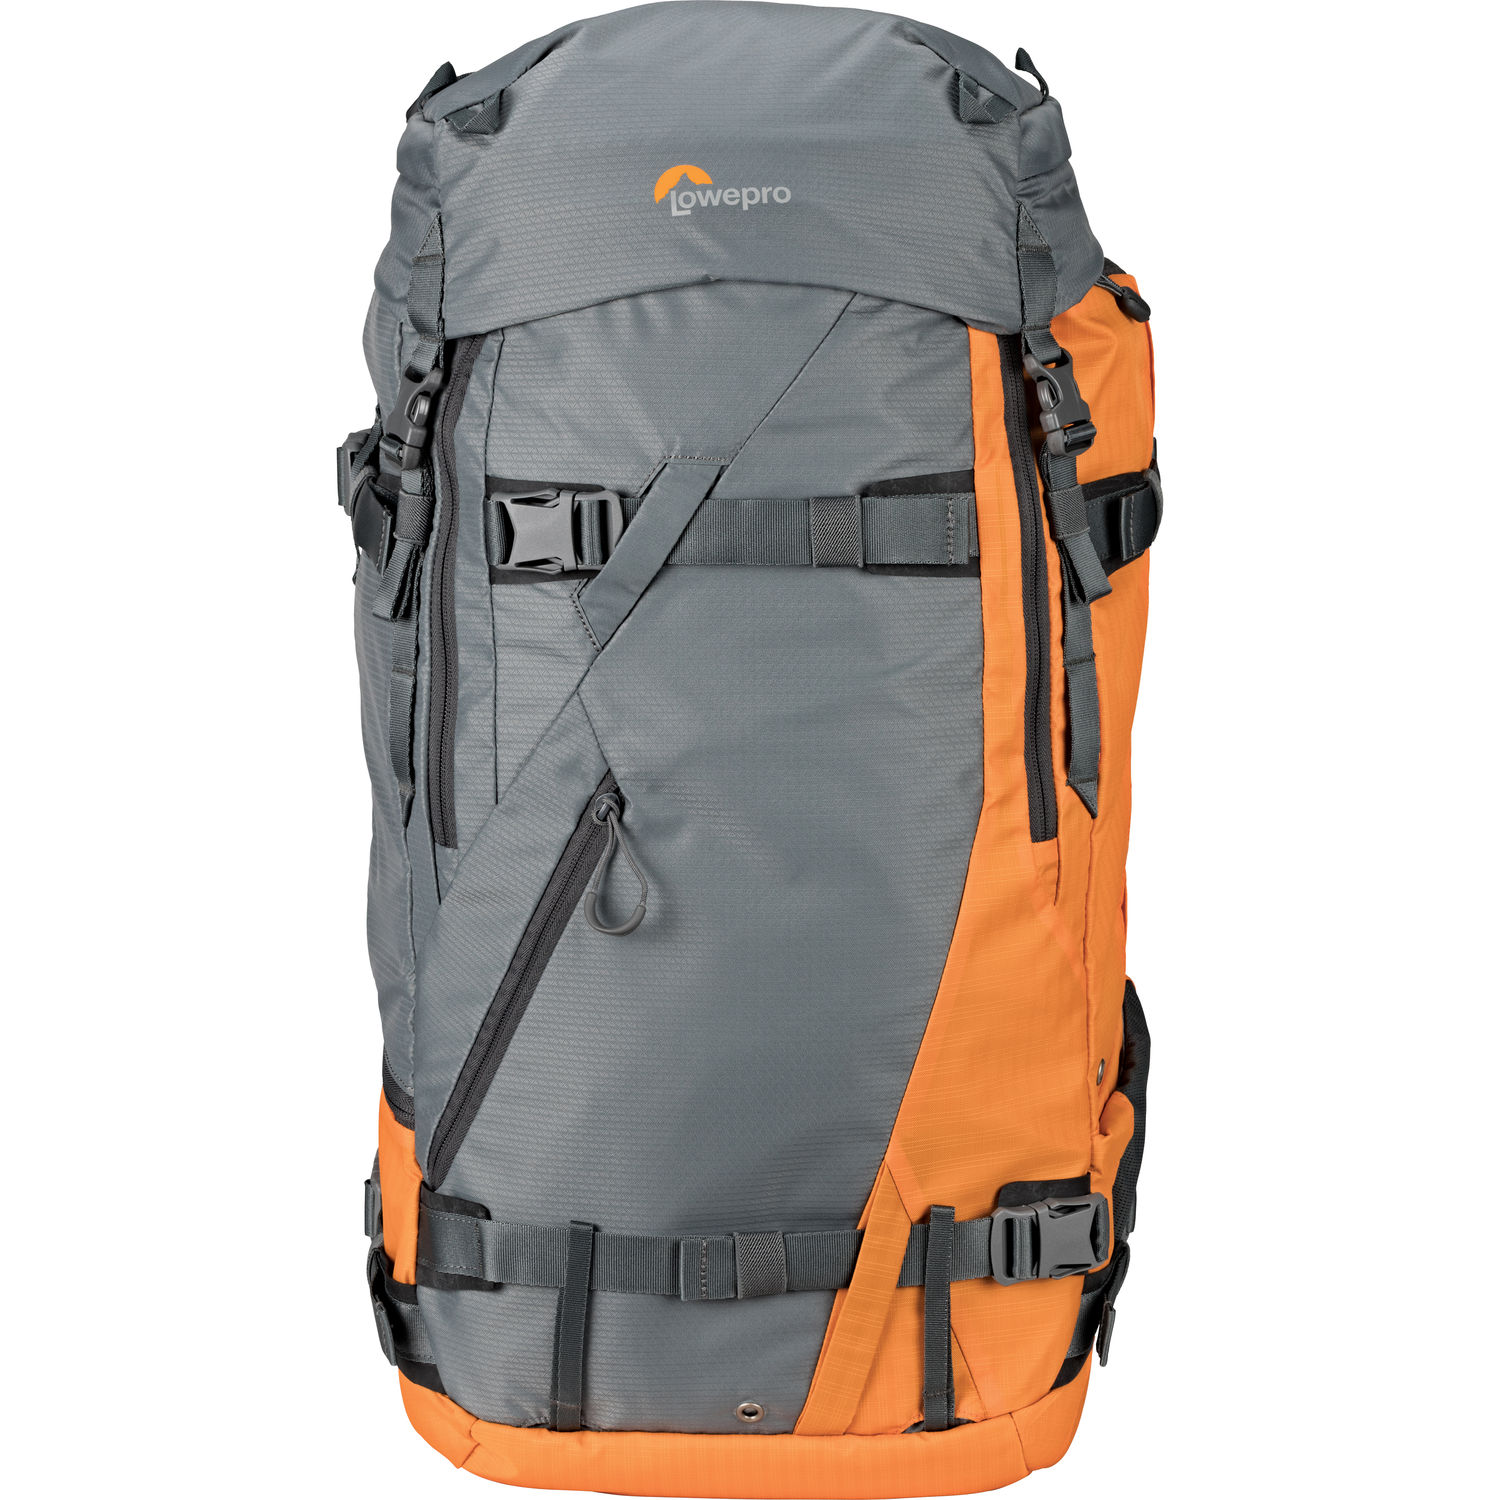 Lowepro Powder Backpack 500 AW - Gray and Orange